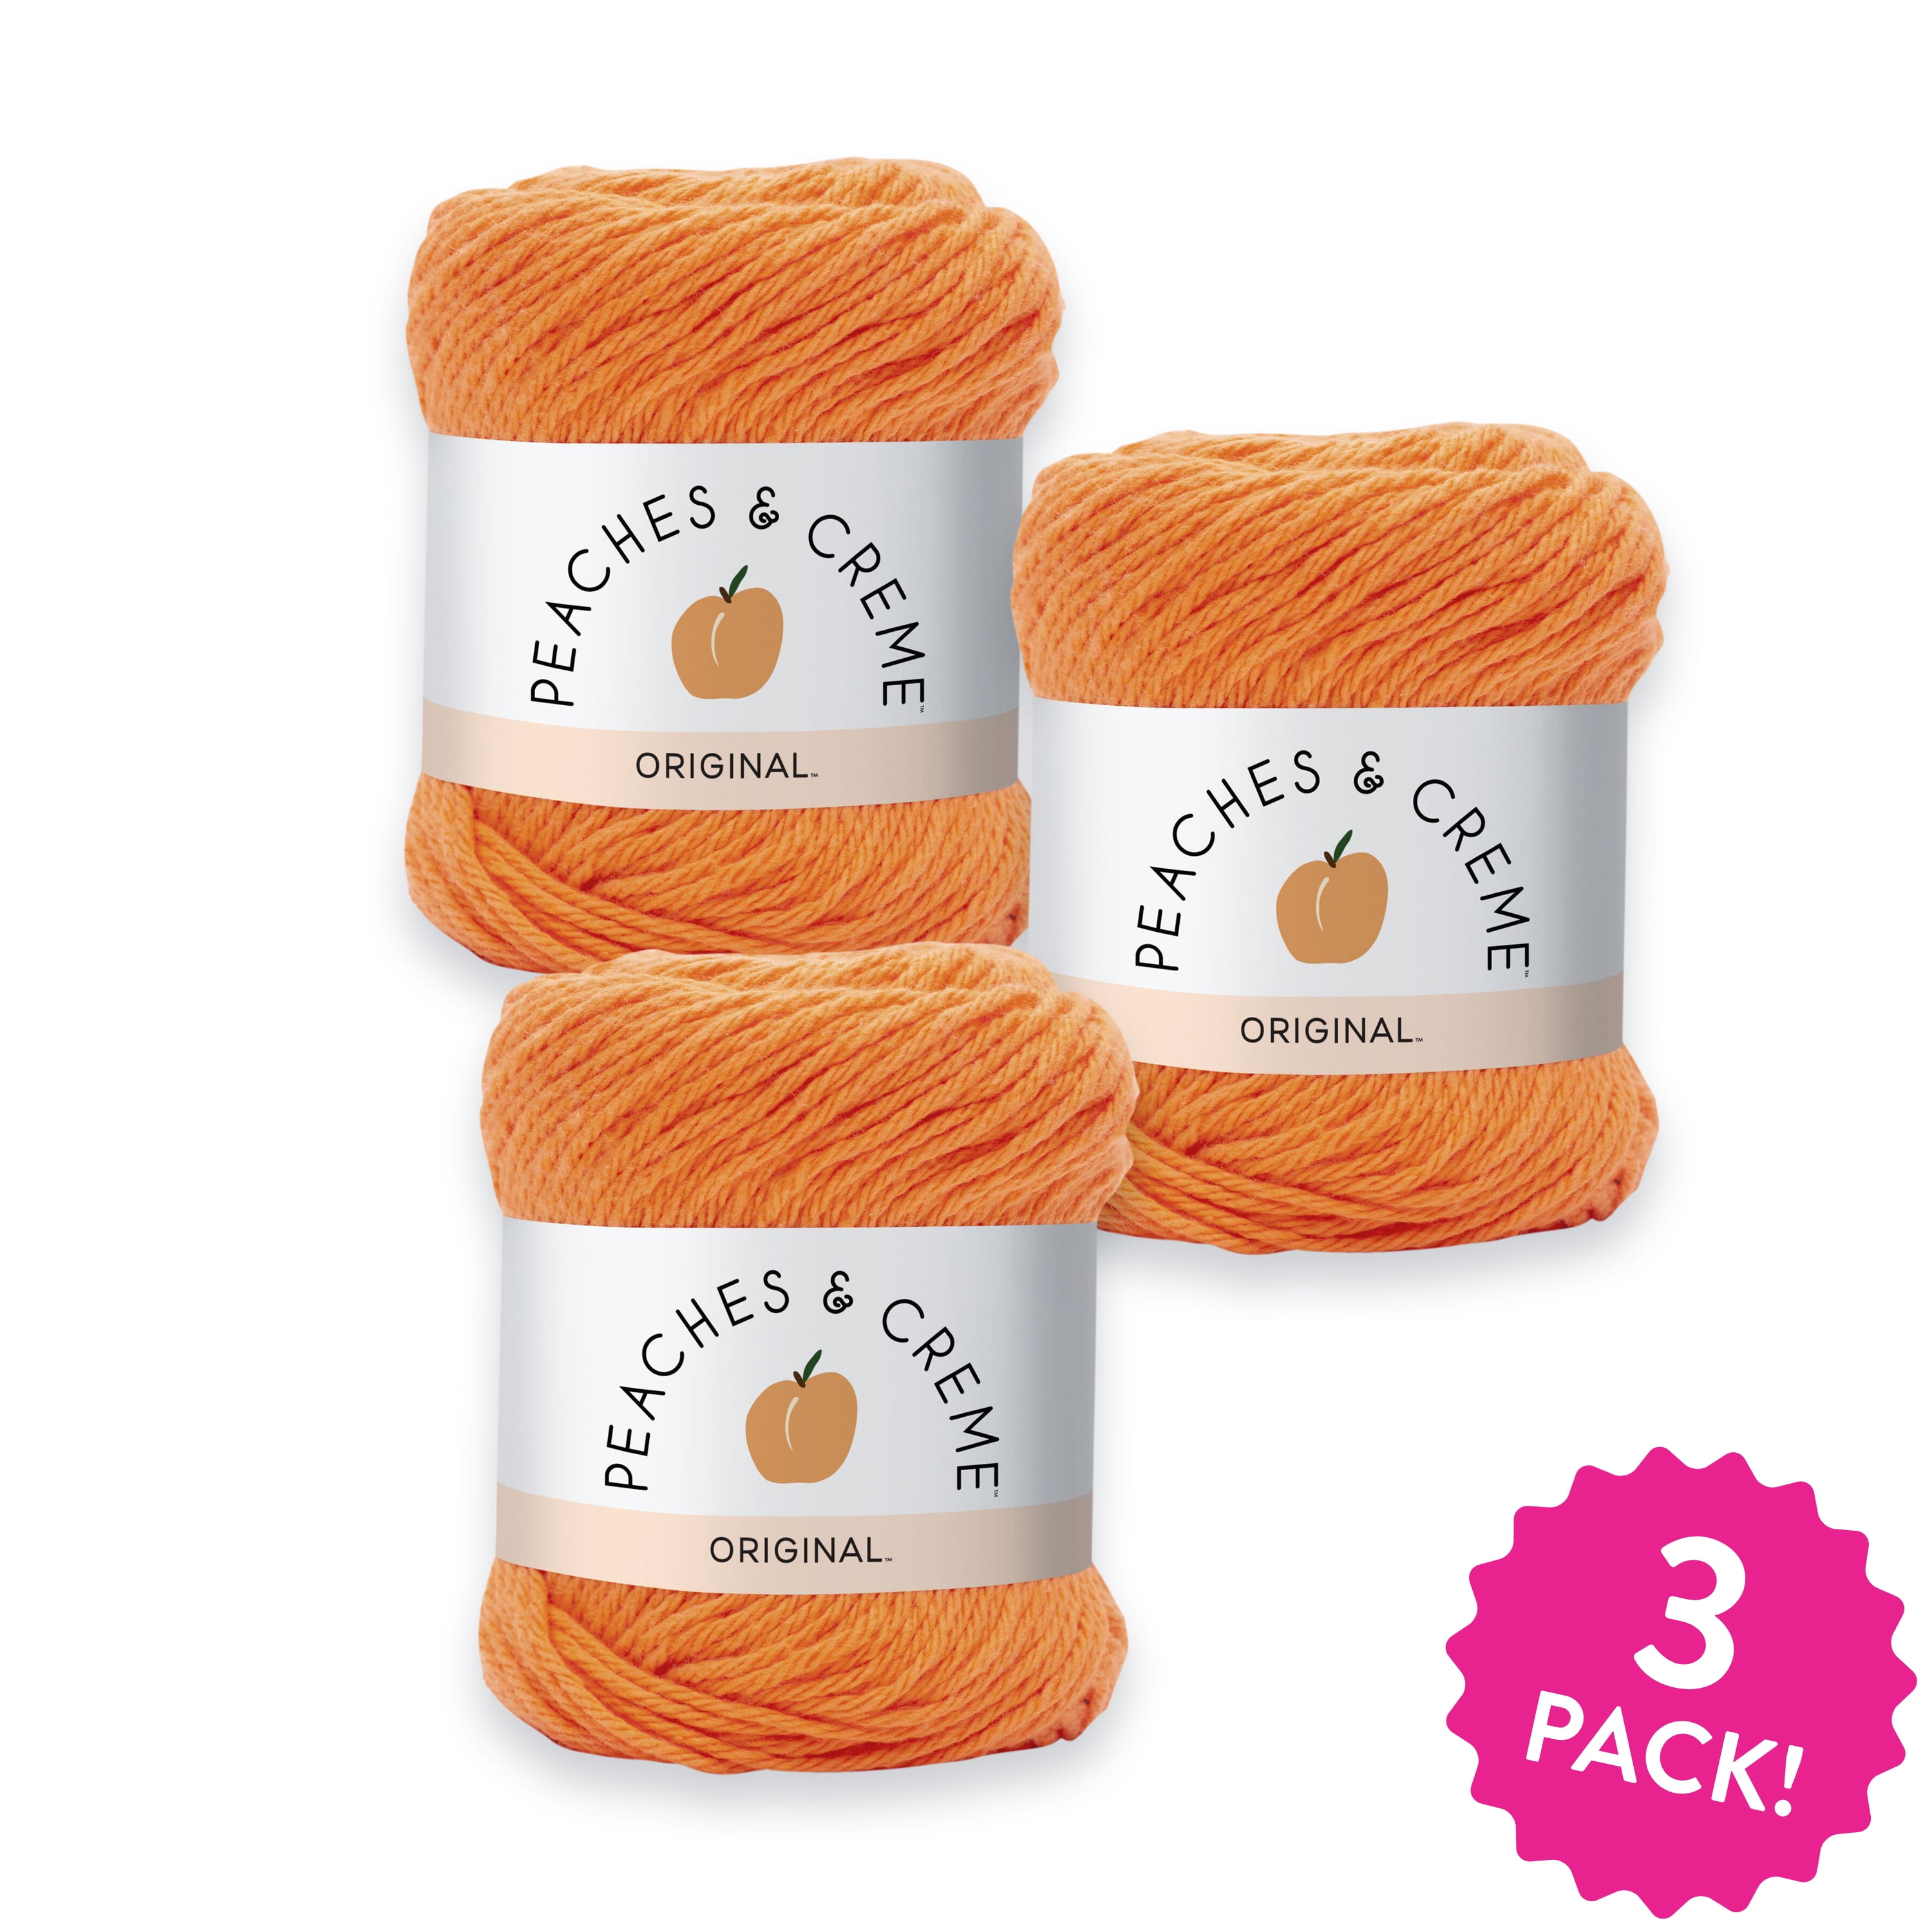 Peaches & Creme #4 Medium Cotton Yarn, Bright Orange 2.5oz/70.9g, 120 Yards (15 Pack), Size: Medium (4)